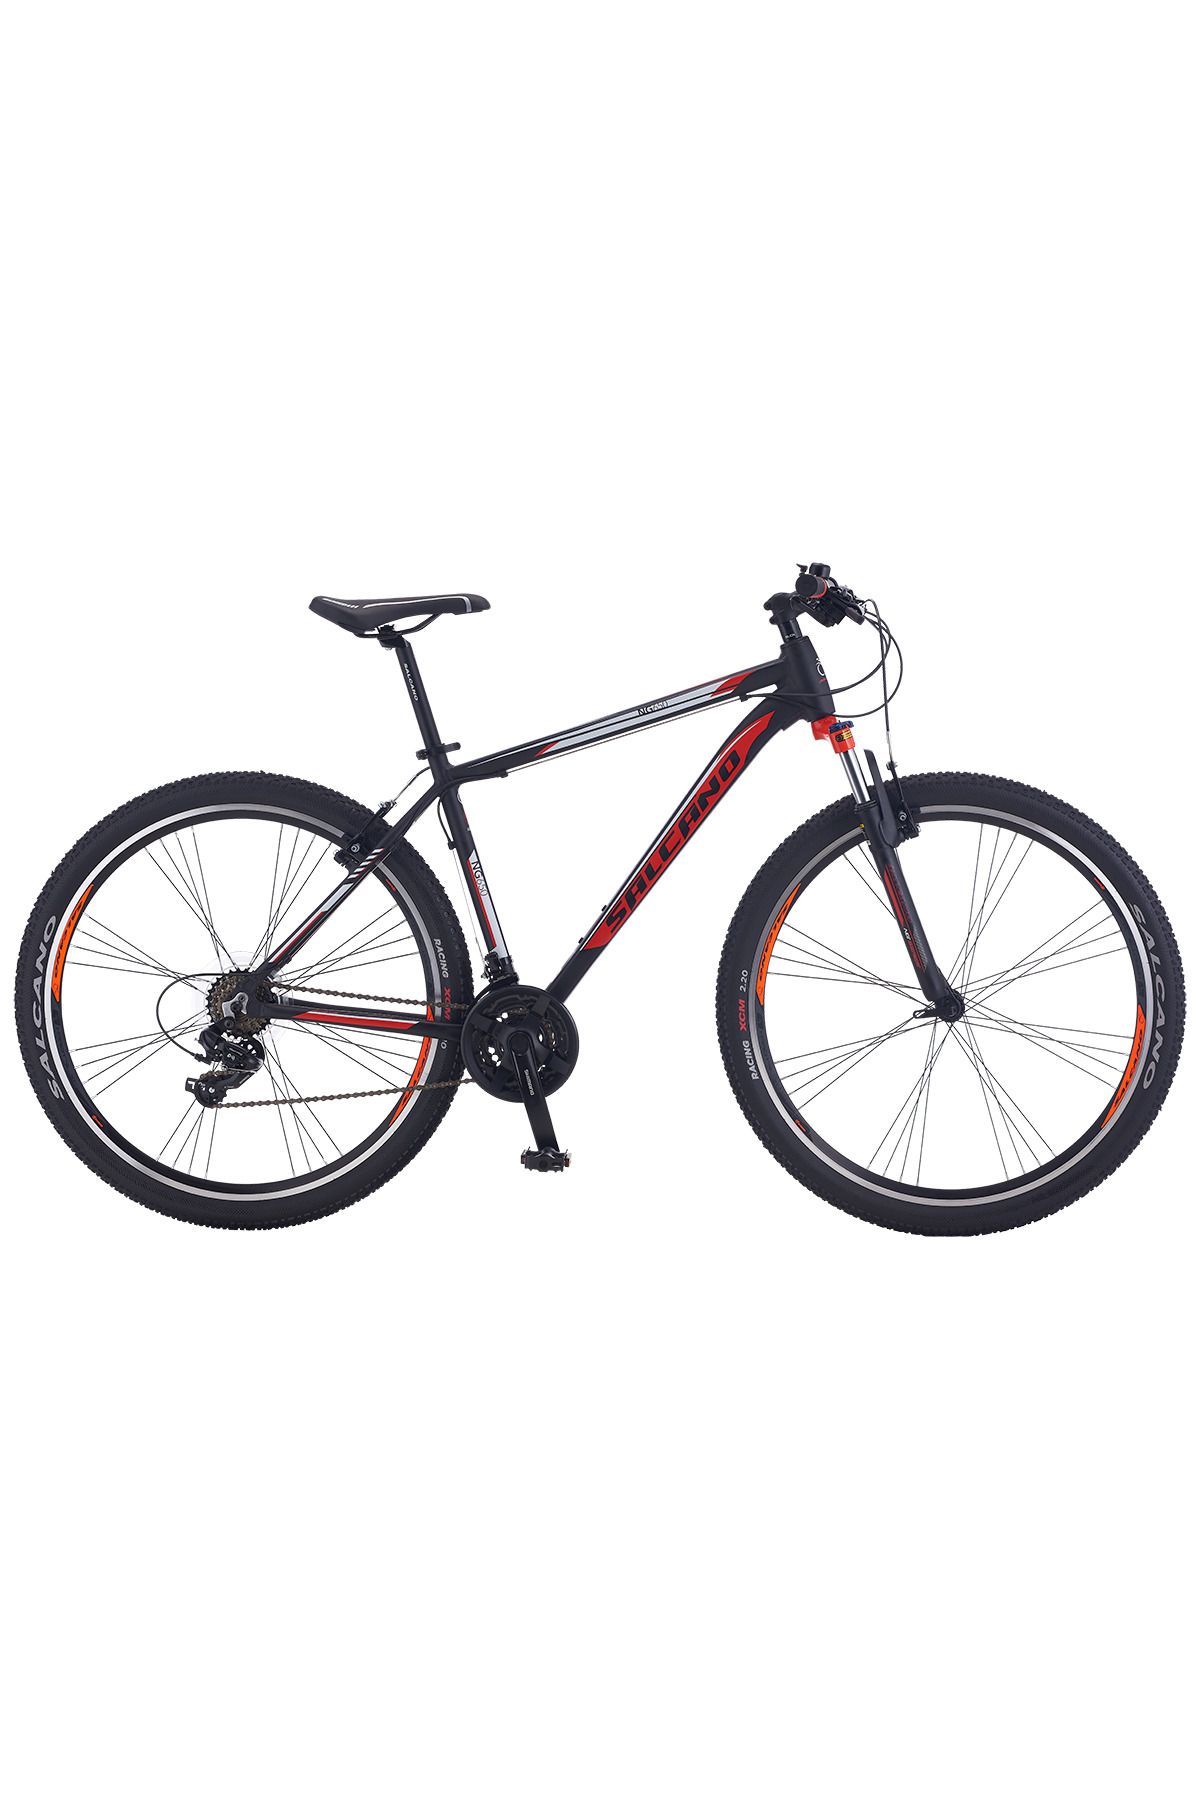 Salcano NG 650 27,5 HD hidrolik disk fren Dağ Bisikleti full Shimano 21 Vites 46 kadro siyah kırmızı